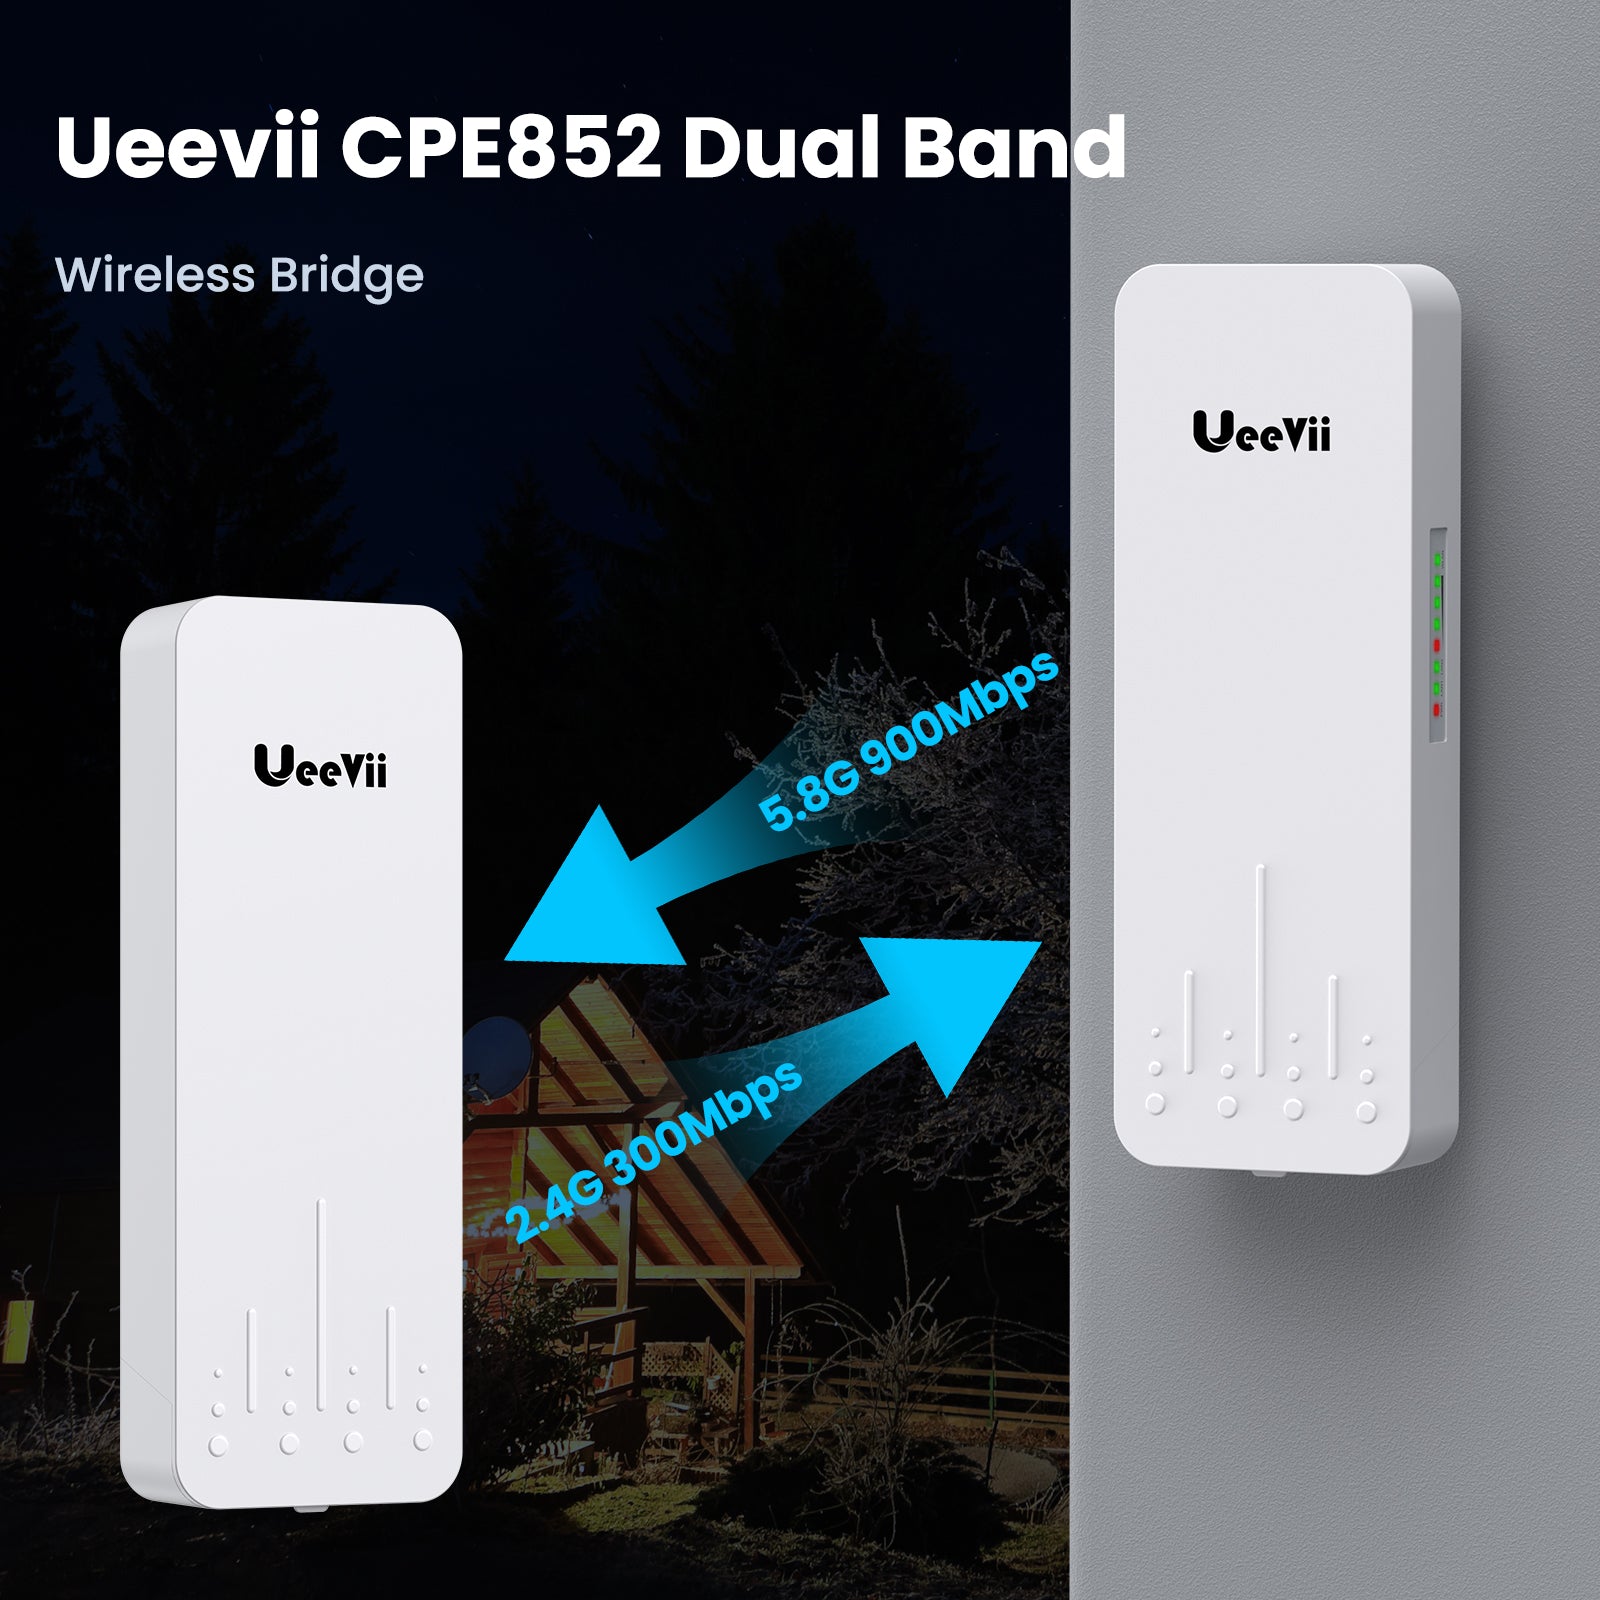 UeeVii CPE852 Dual Band 2.4G 300Mbps | 5.8G 900Mbps Wireless Bridge, 2Pcs